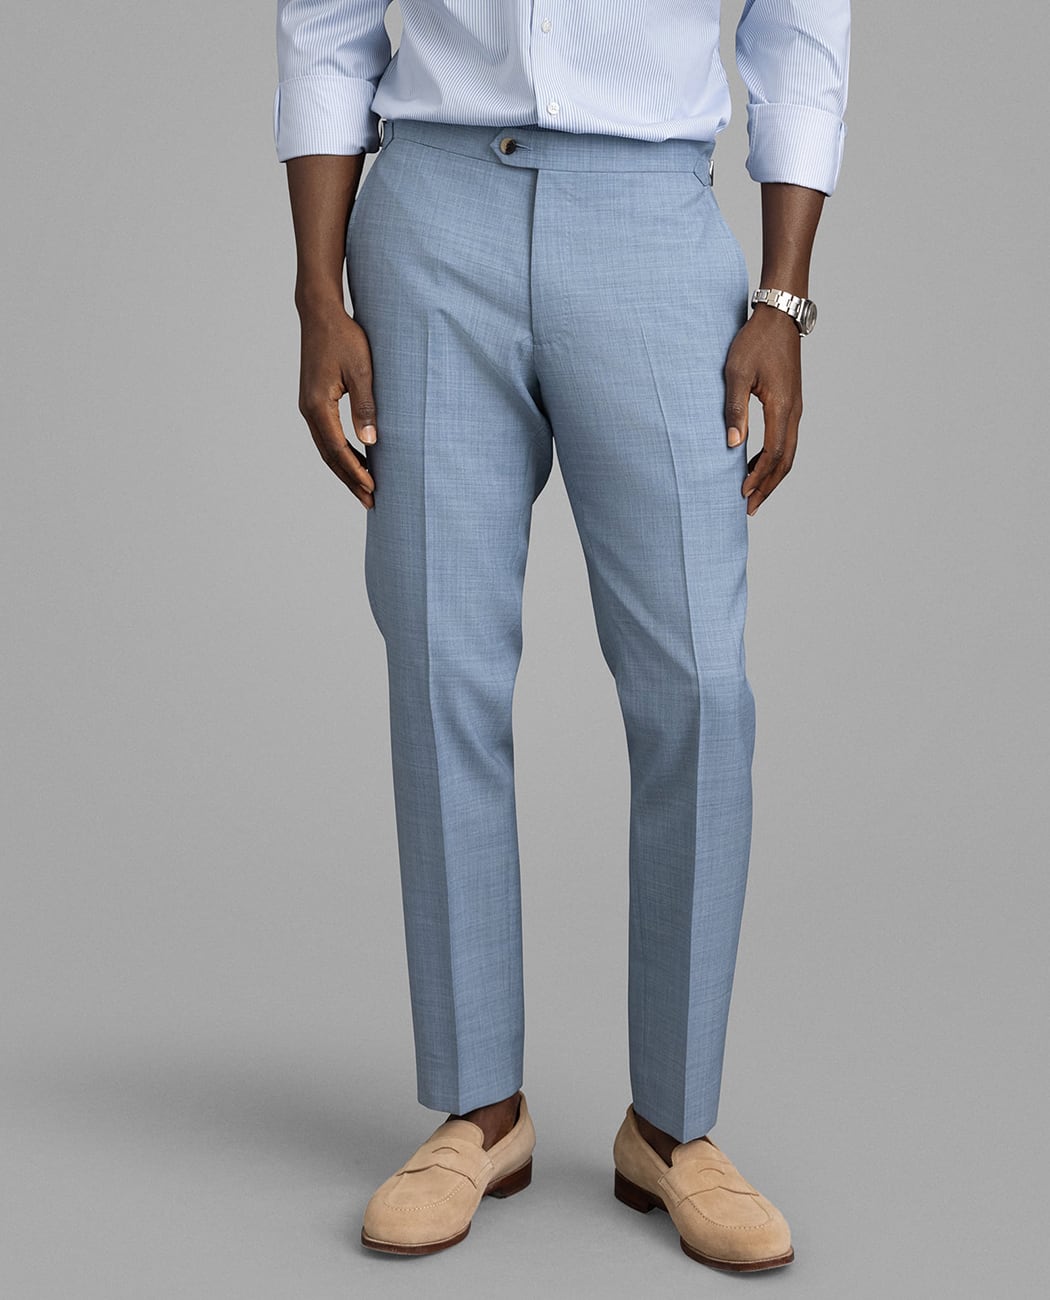 Shop Custom Pants | Men's Dress Pants Blue Pants - Proper Cloth